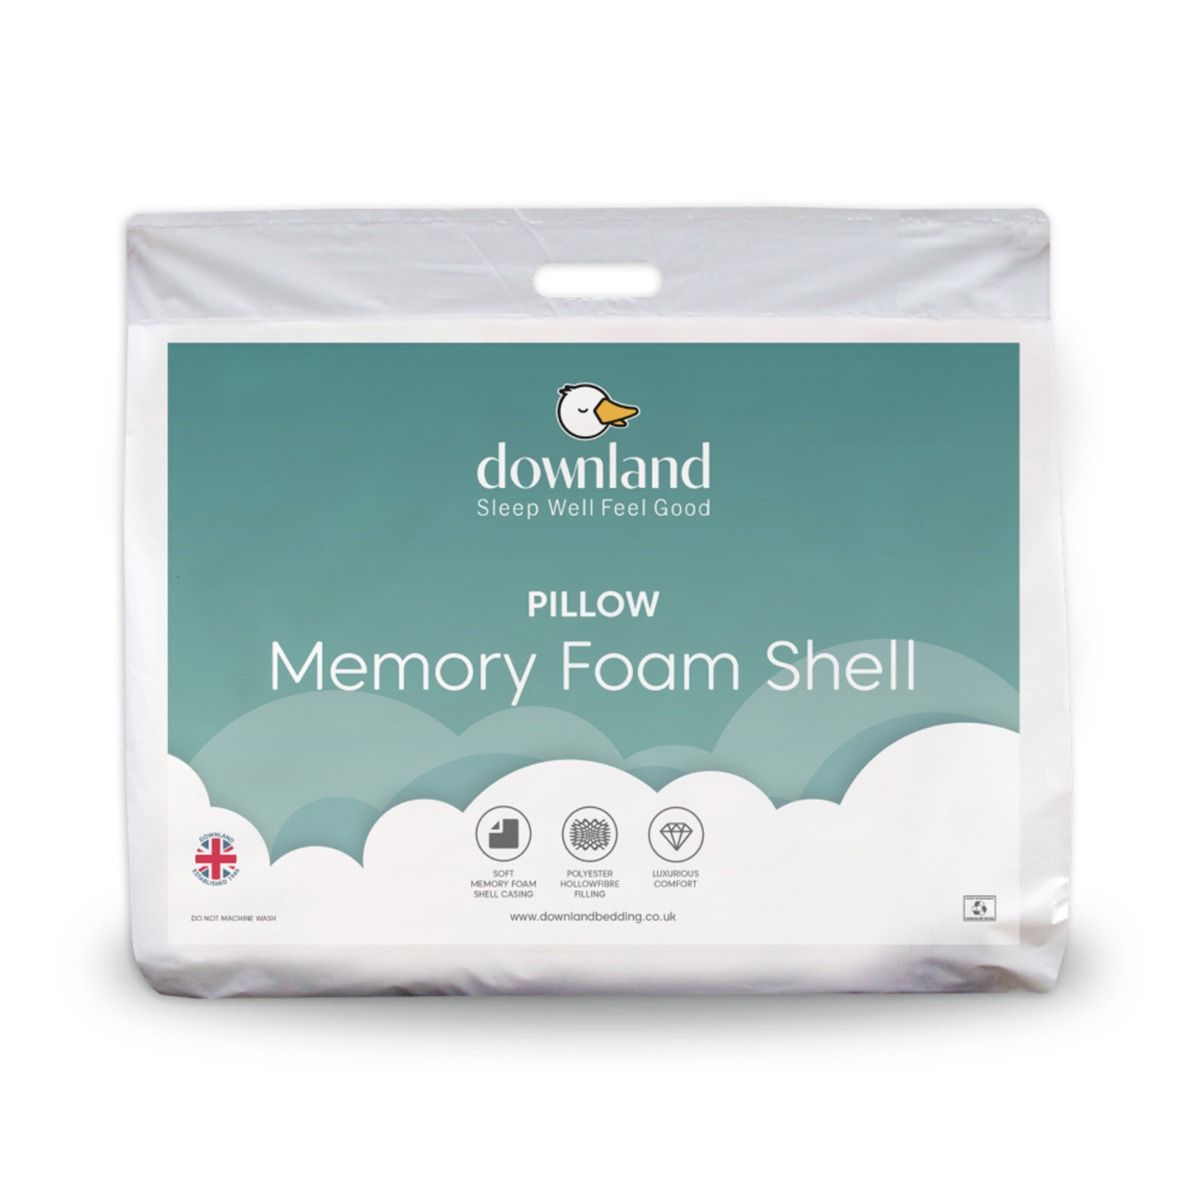 Downland Memory Foam Shell Pillow - White